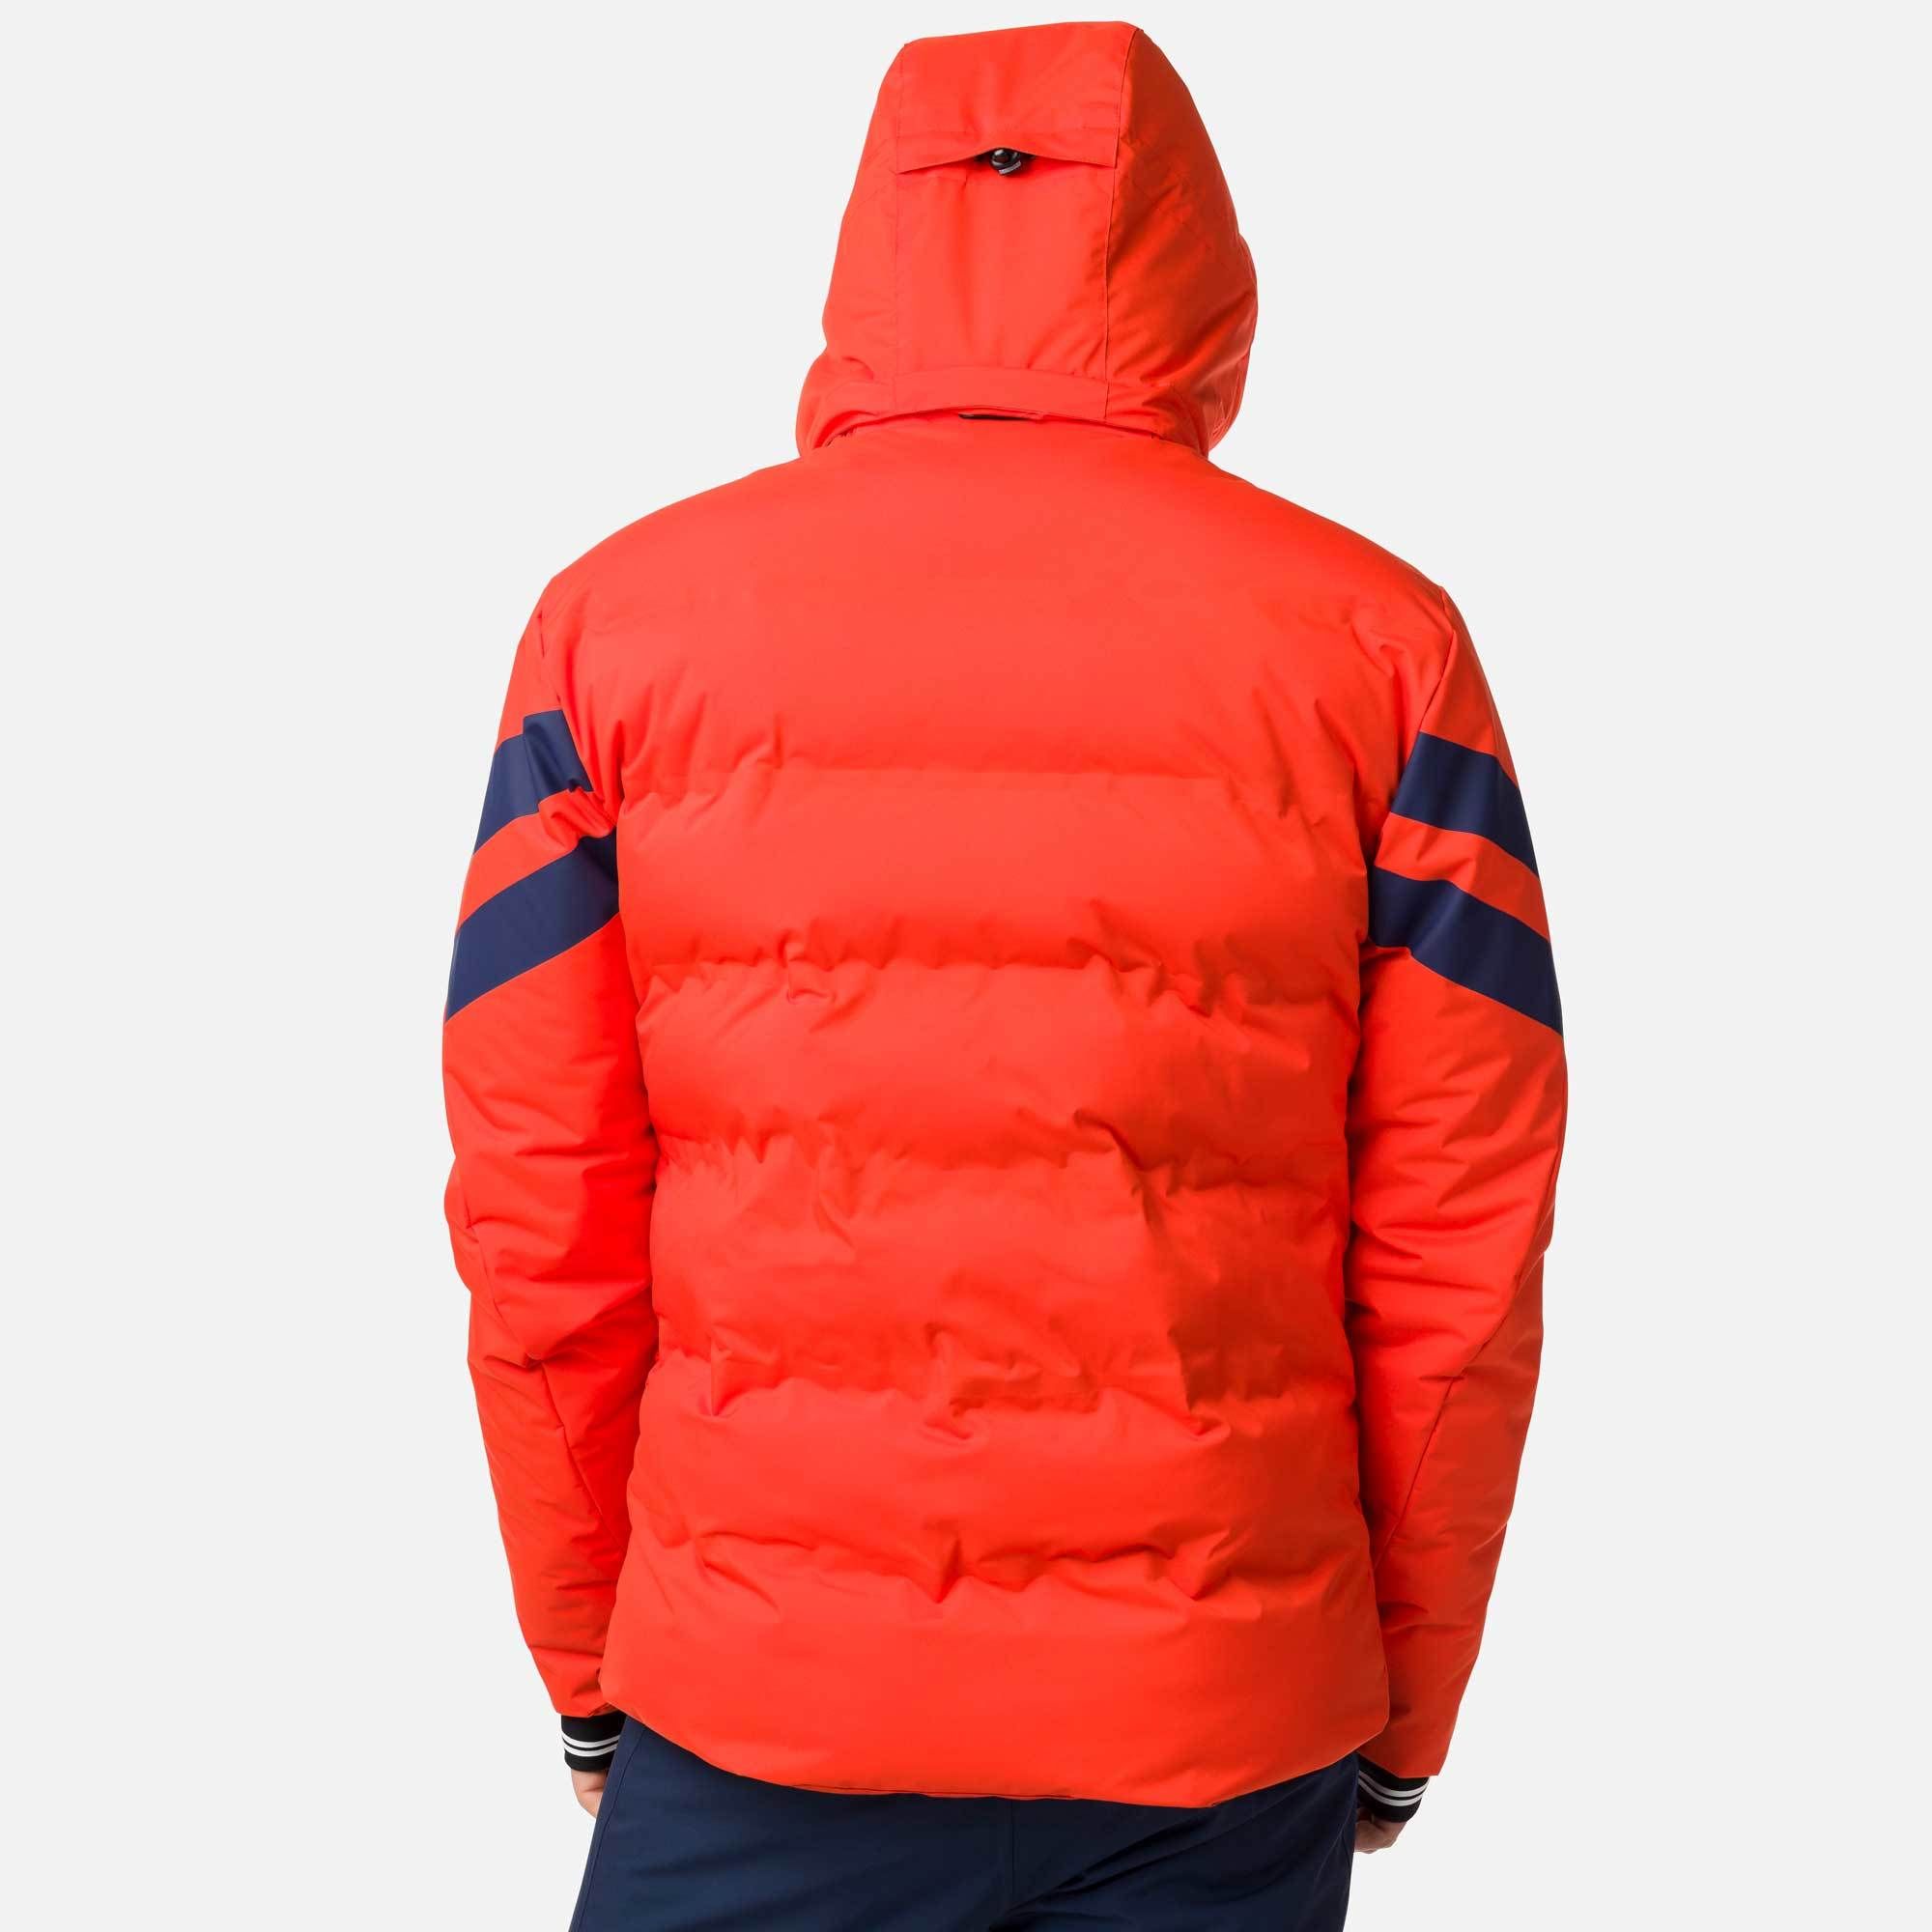 Rossignol Mens Depart Ski Jacket – Medium – Orange